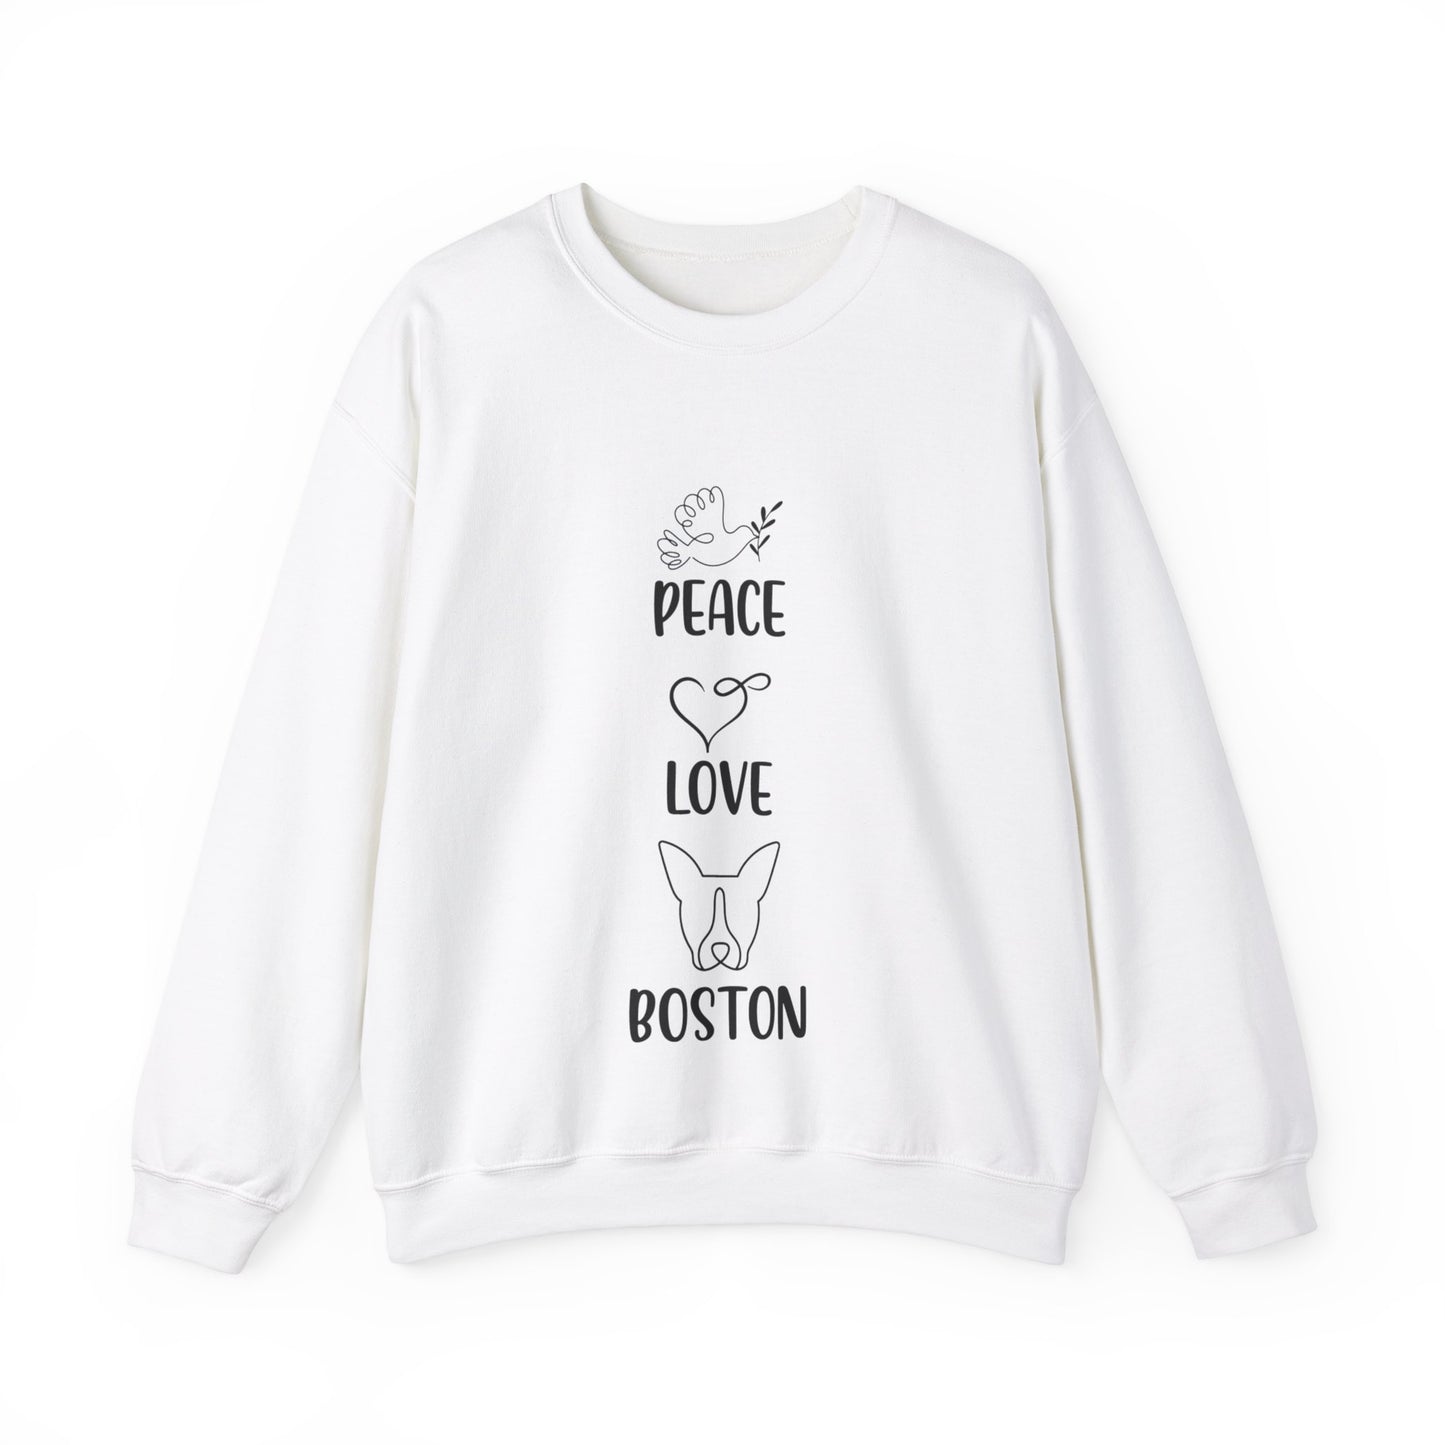 Bruin  - Unisex Sweatshirt for Boston Terrier lovers